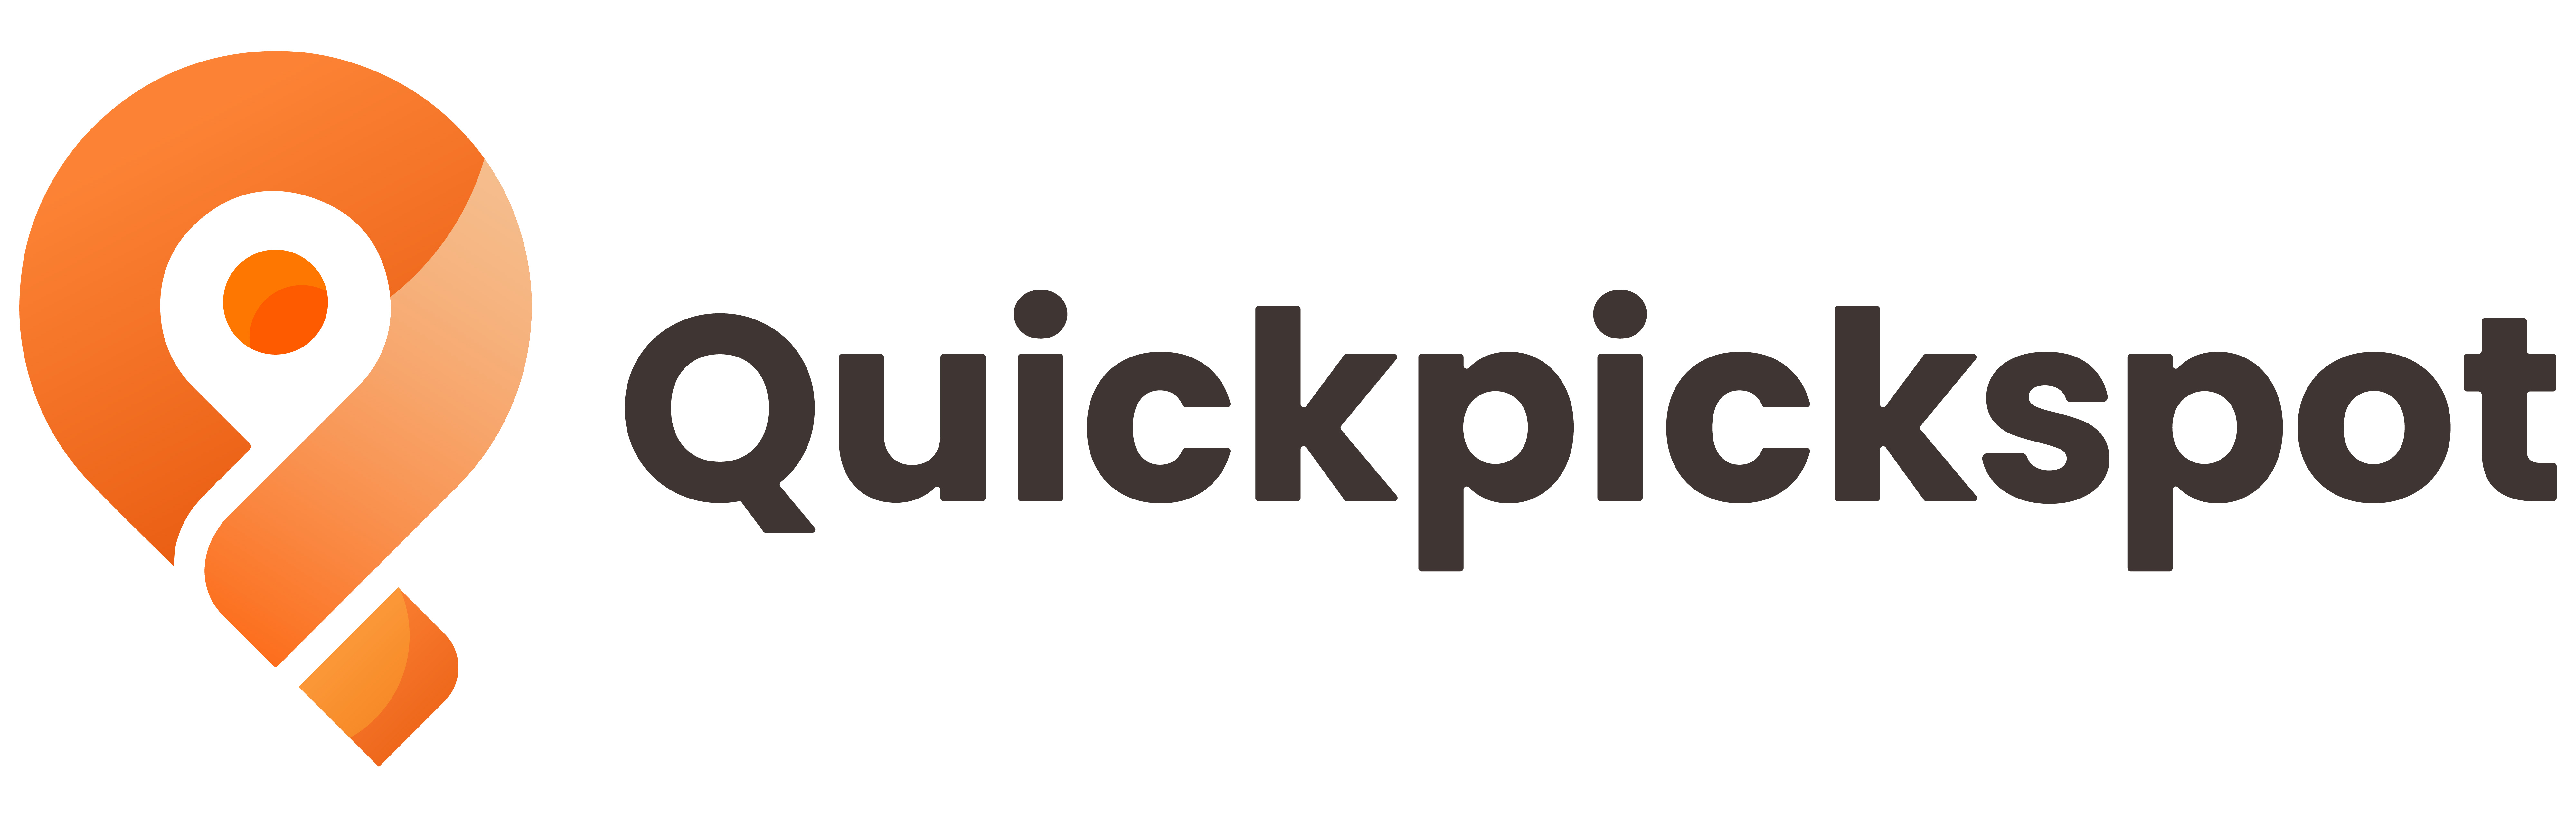 Quickpickspot